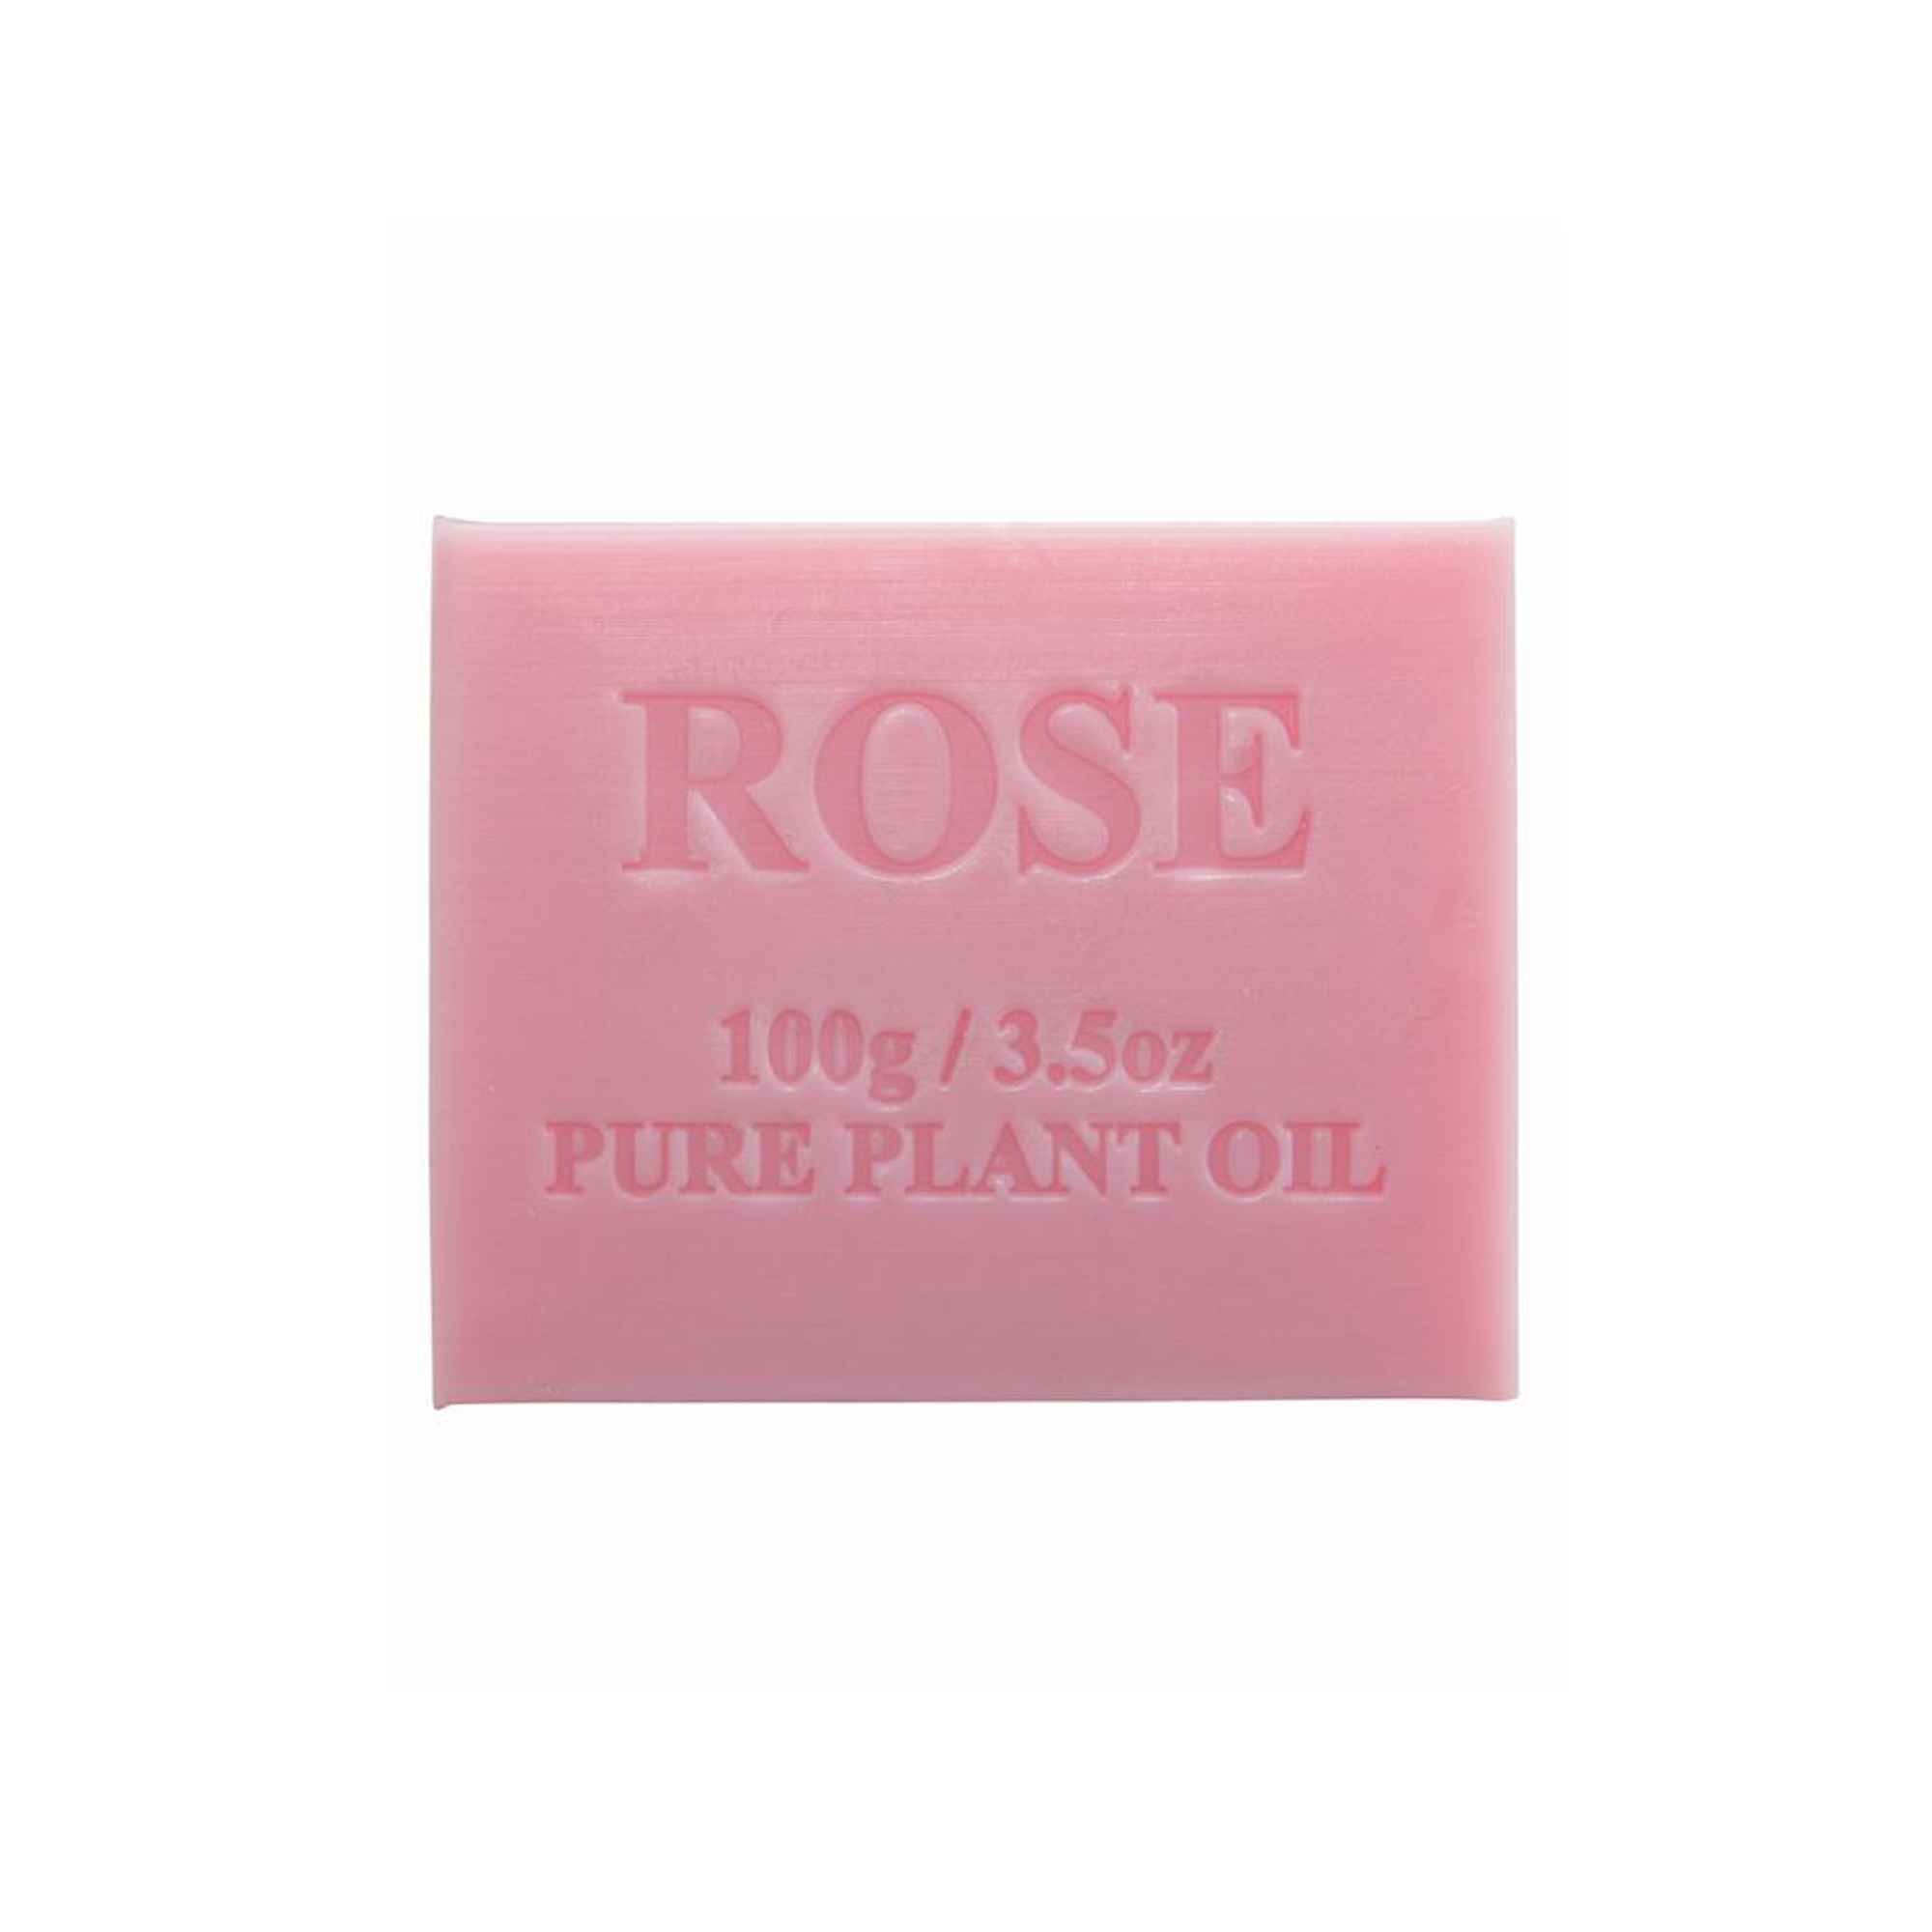 Rose 100g